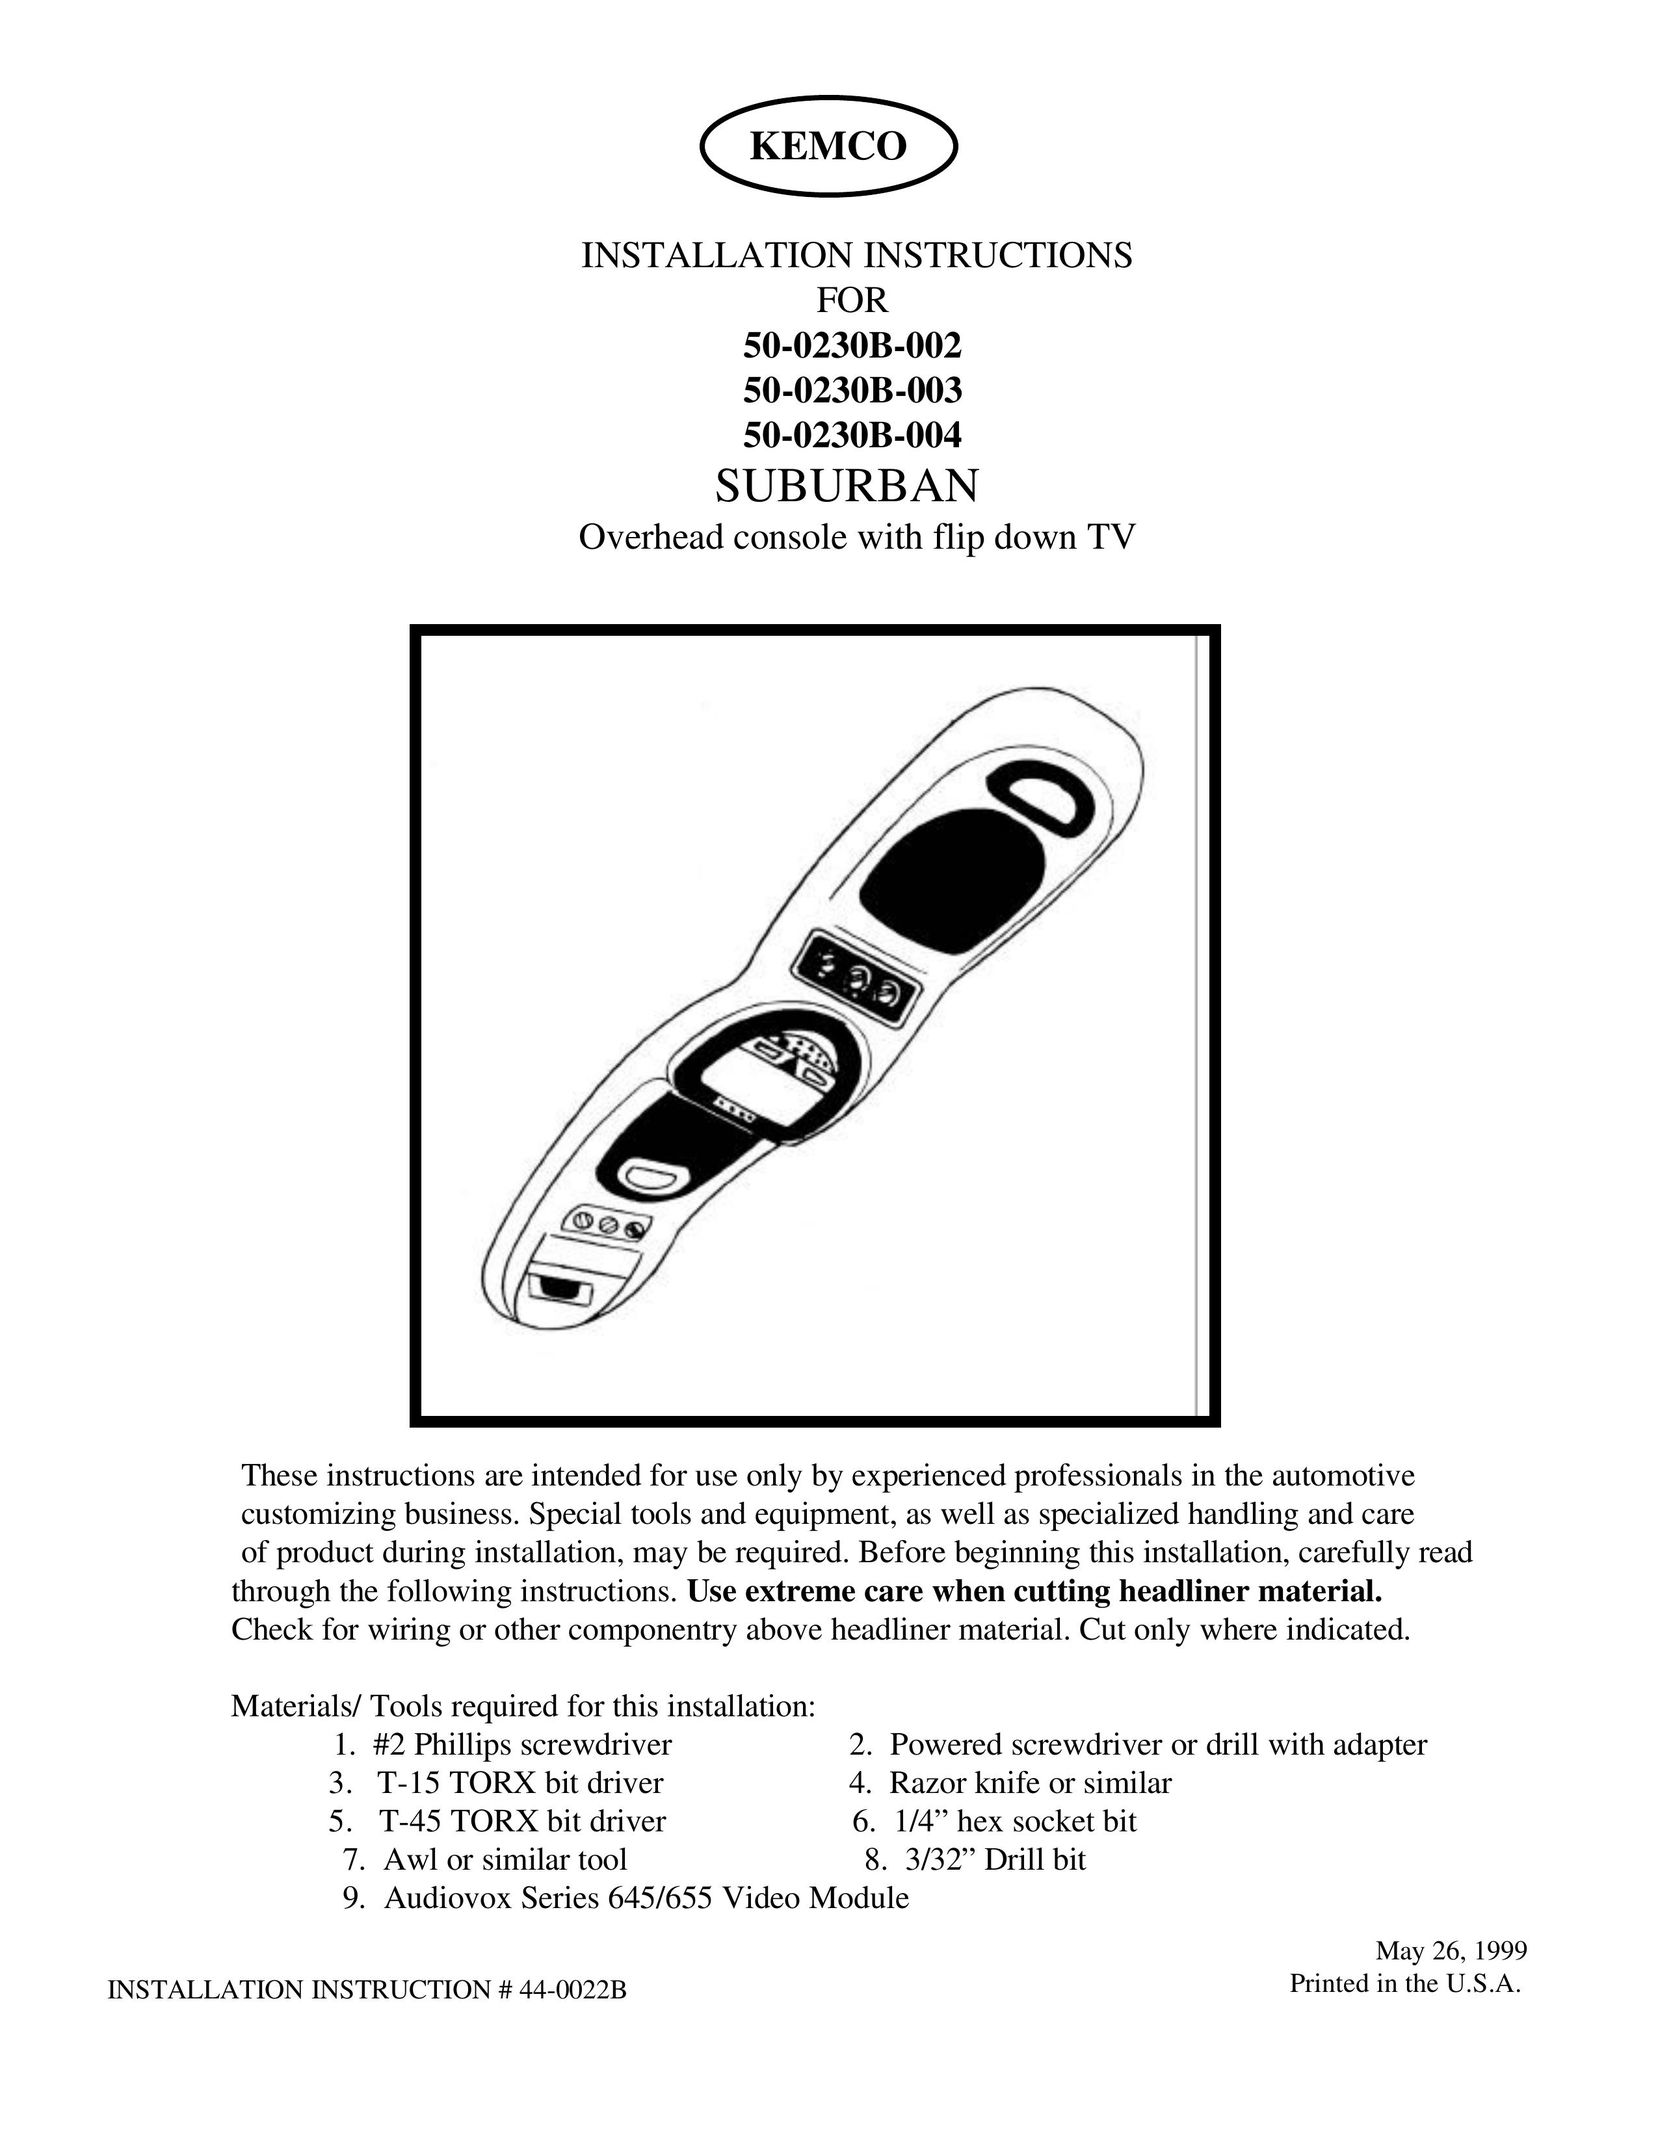 Plantronics 50-0230B-004 Car Video System User Manual